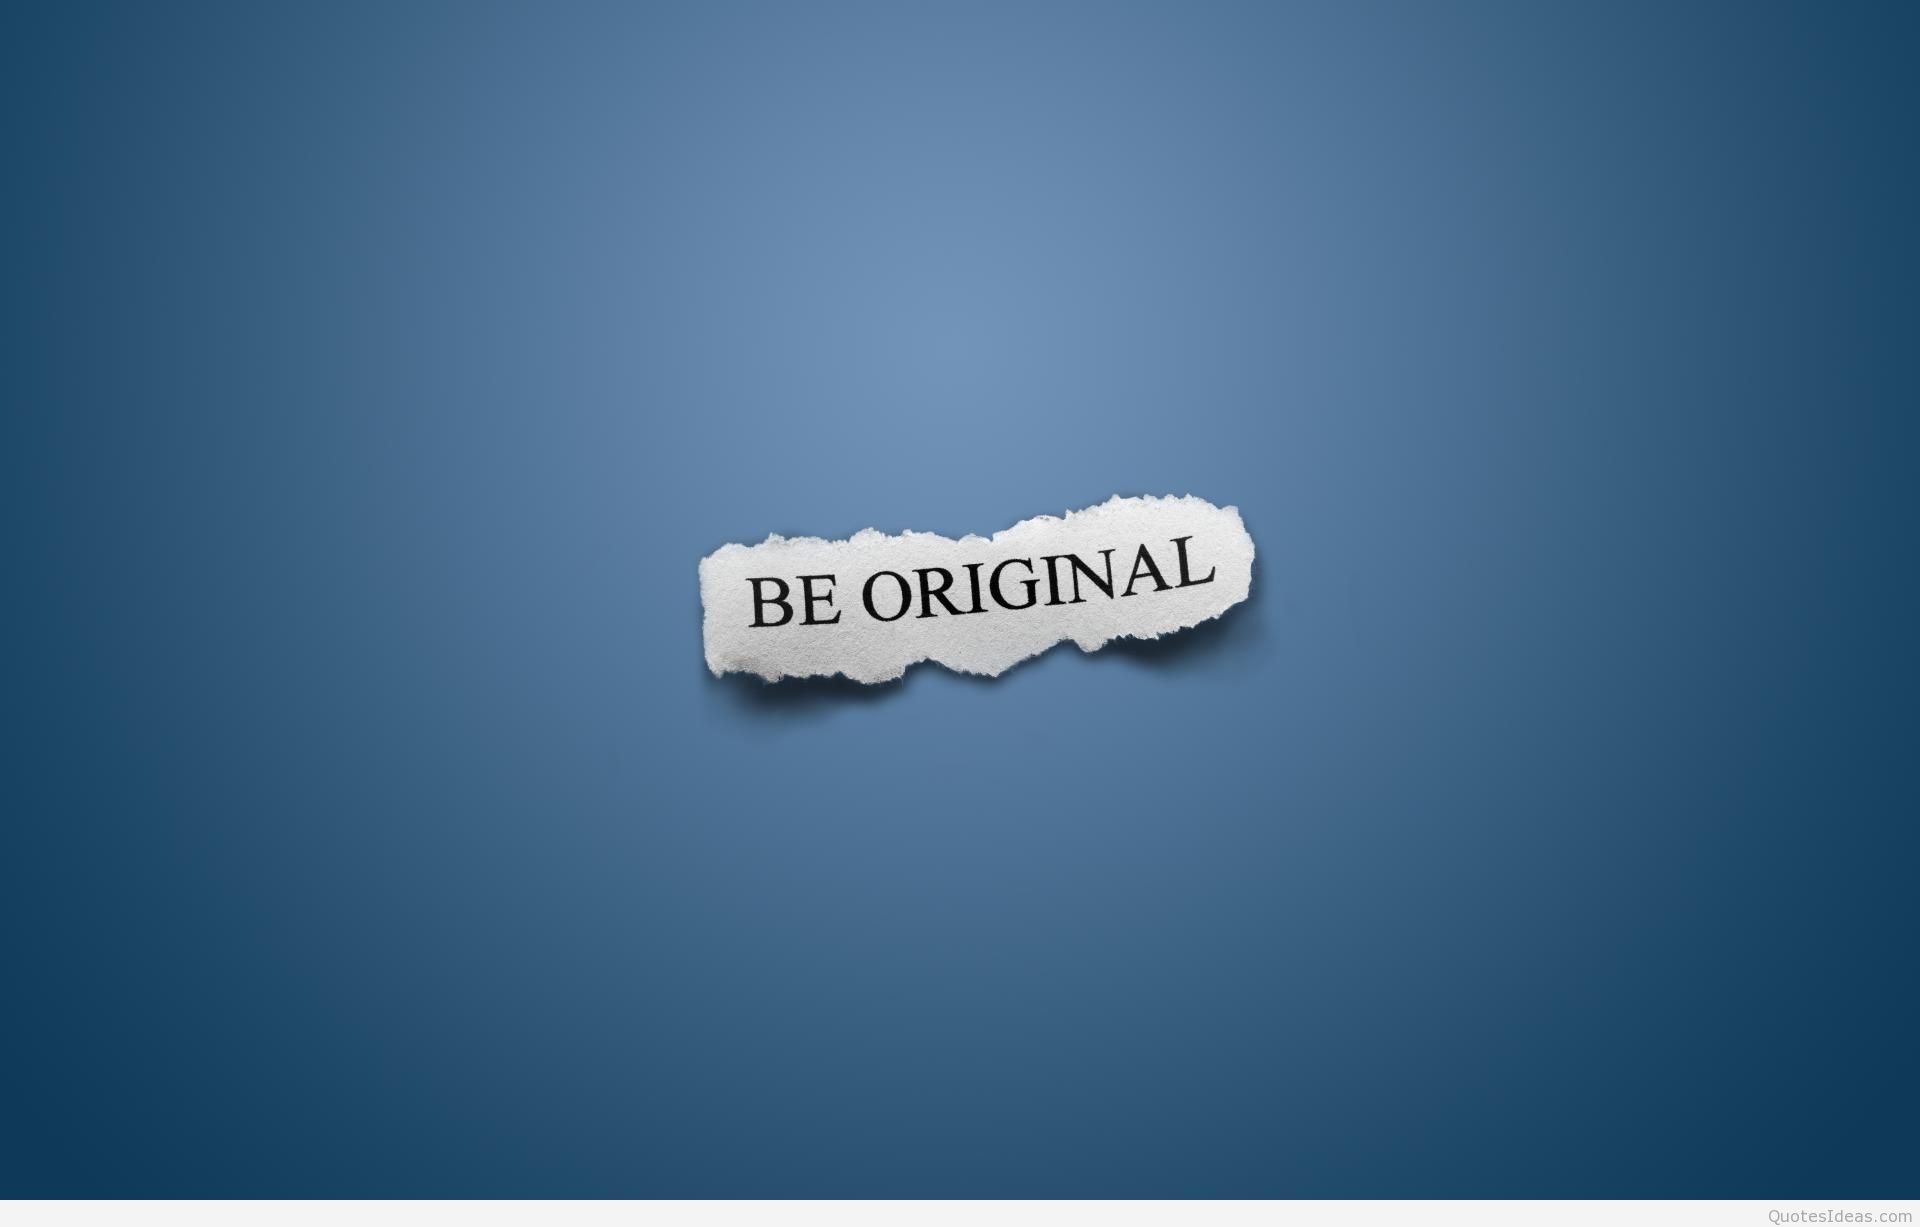 Be-original-motivational-quote-wallpaper-hd.jpg